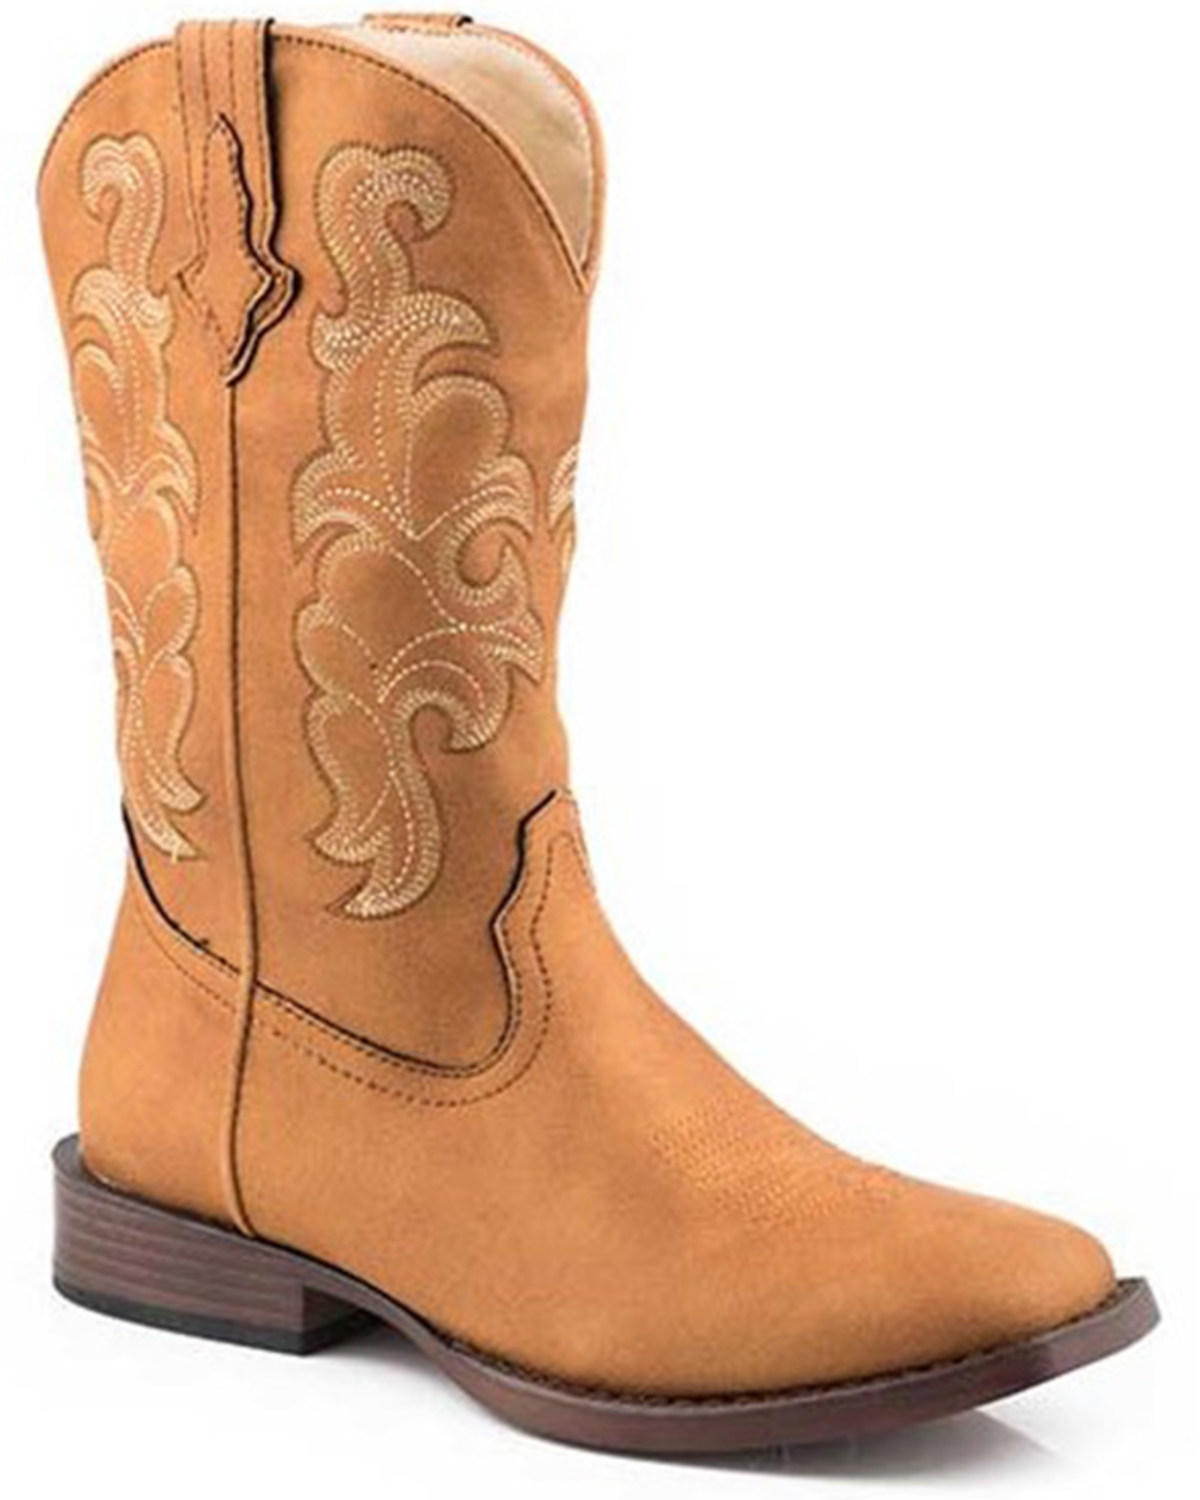 Roper Women's Cowboy Classic Western Boots - Square Toe